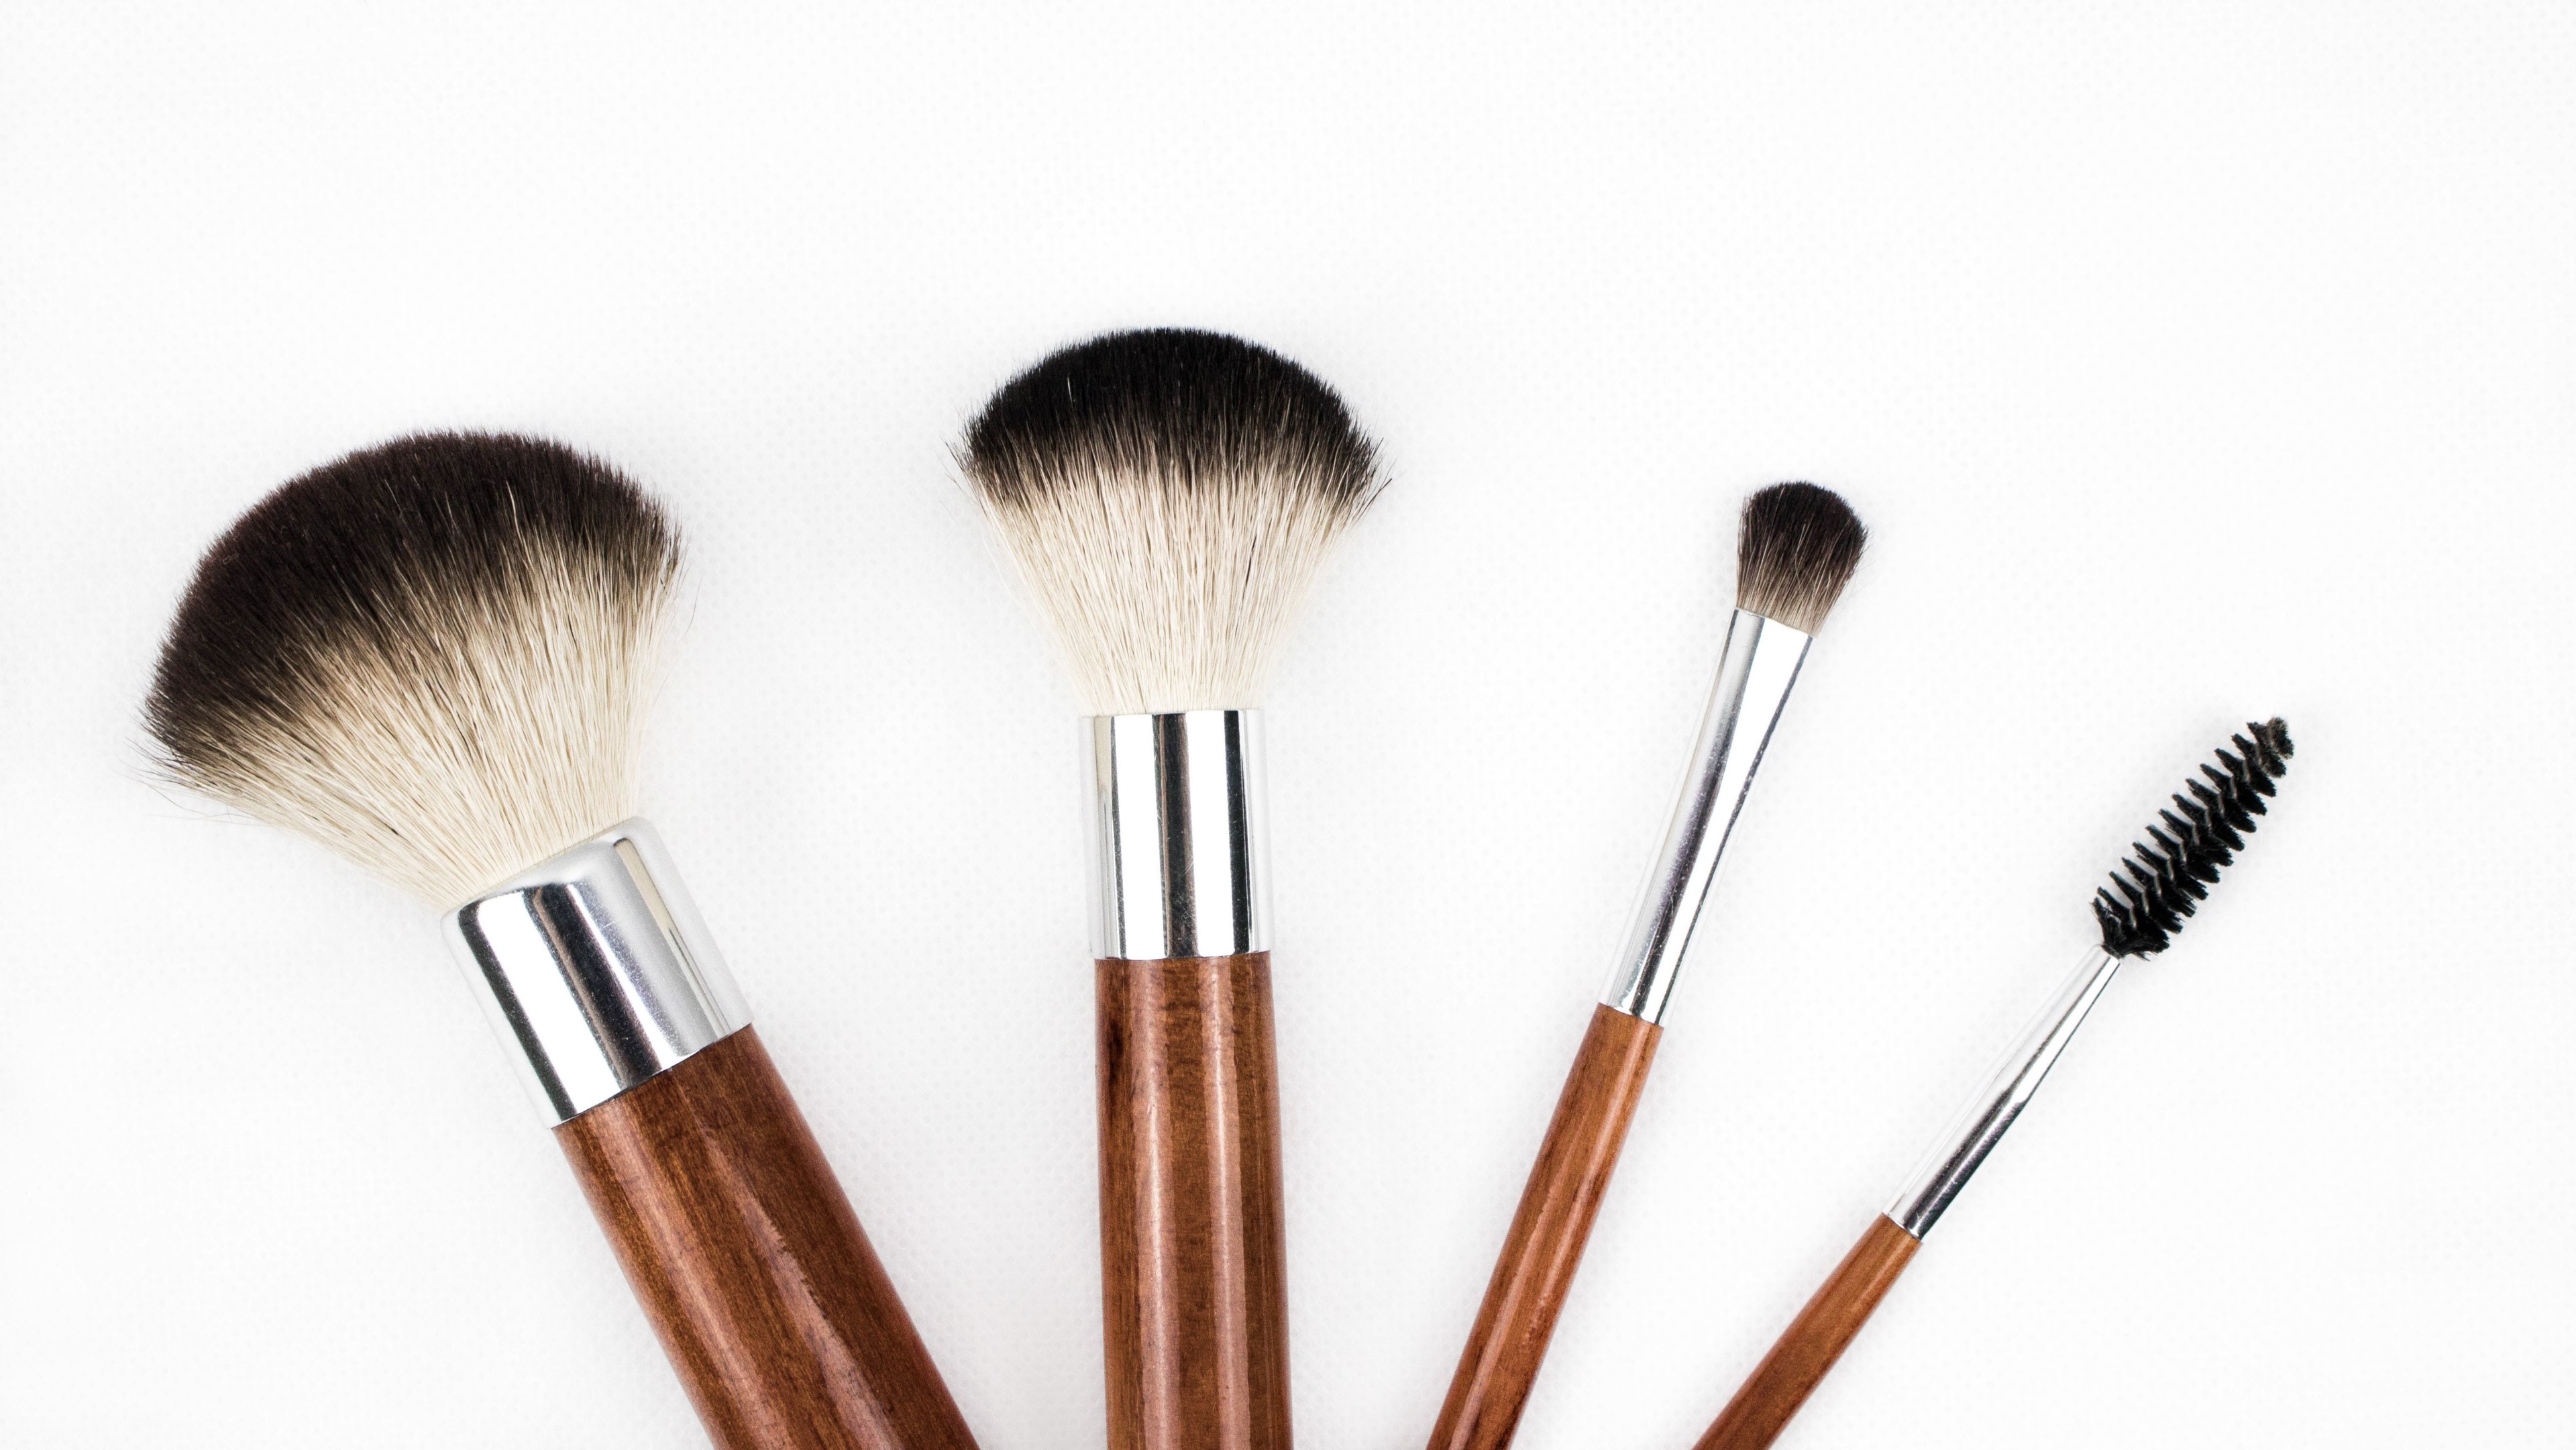 Wallpaper / makeup brush brush cosmetics makeup make up 4k wallpaper free download